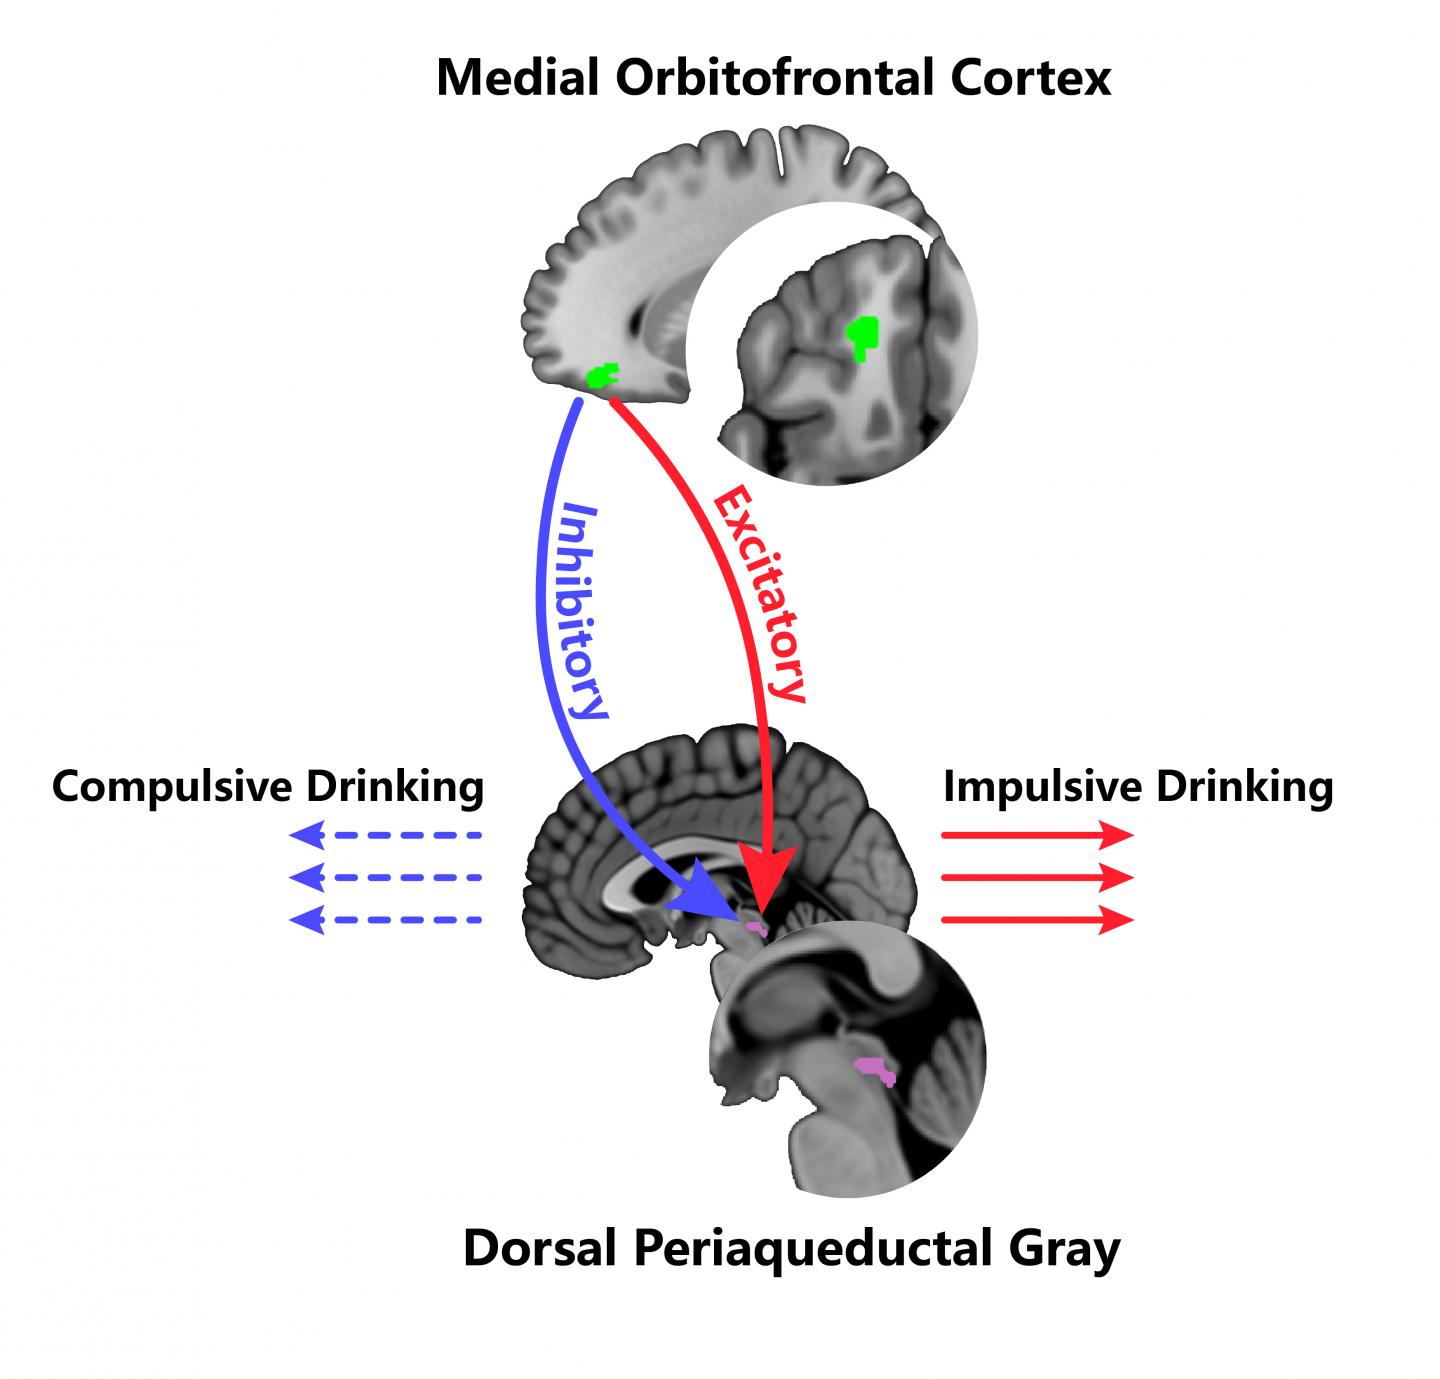 The Medial Orbitofrontal Cortex